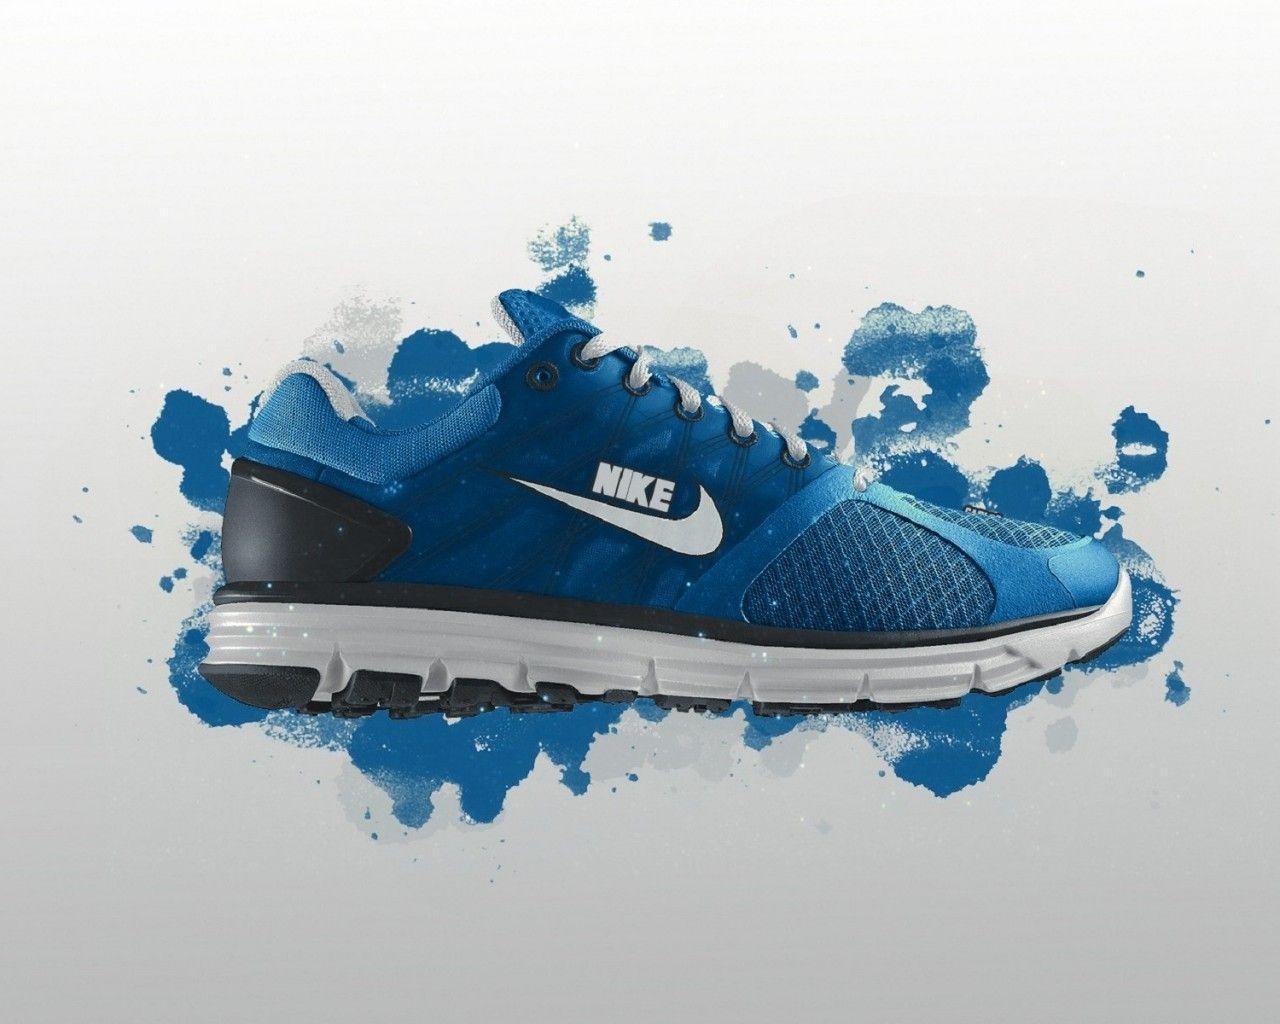 Blue Nike Shoes Air Wallpaper Image Wallpaper. Wallpaper